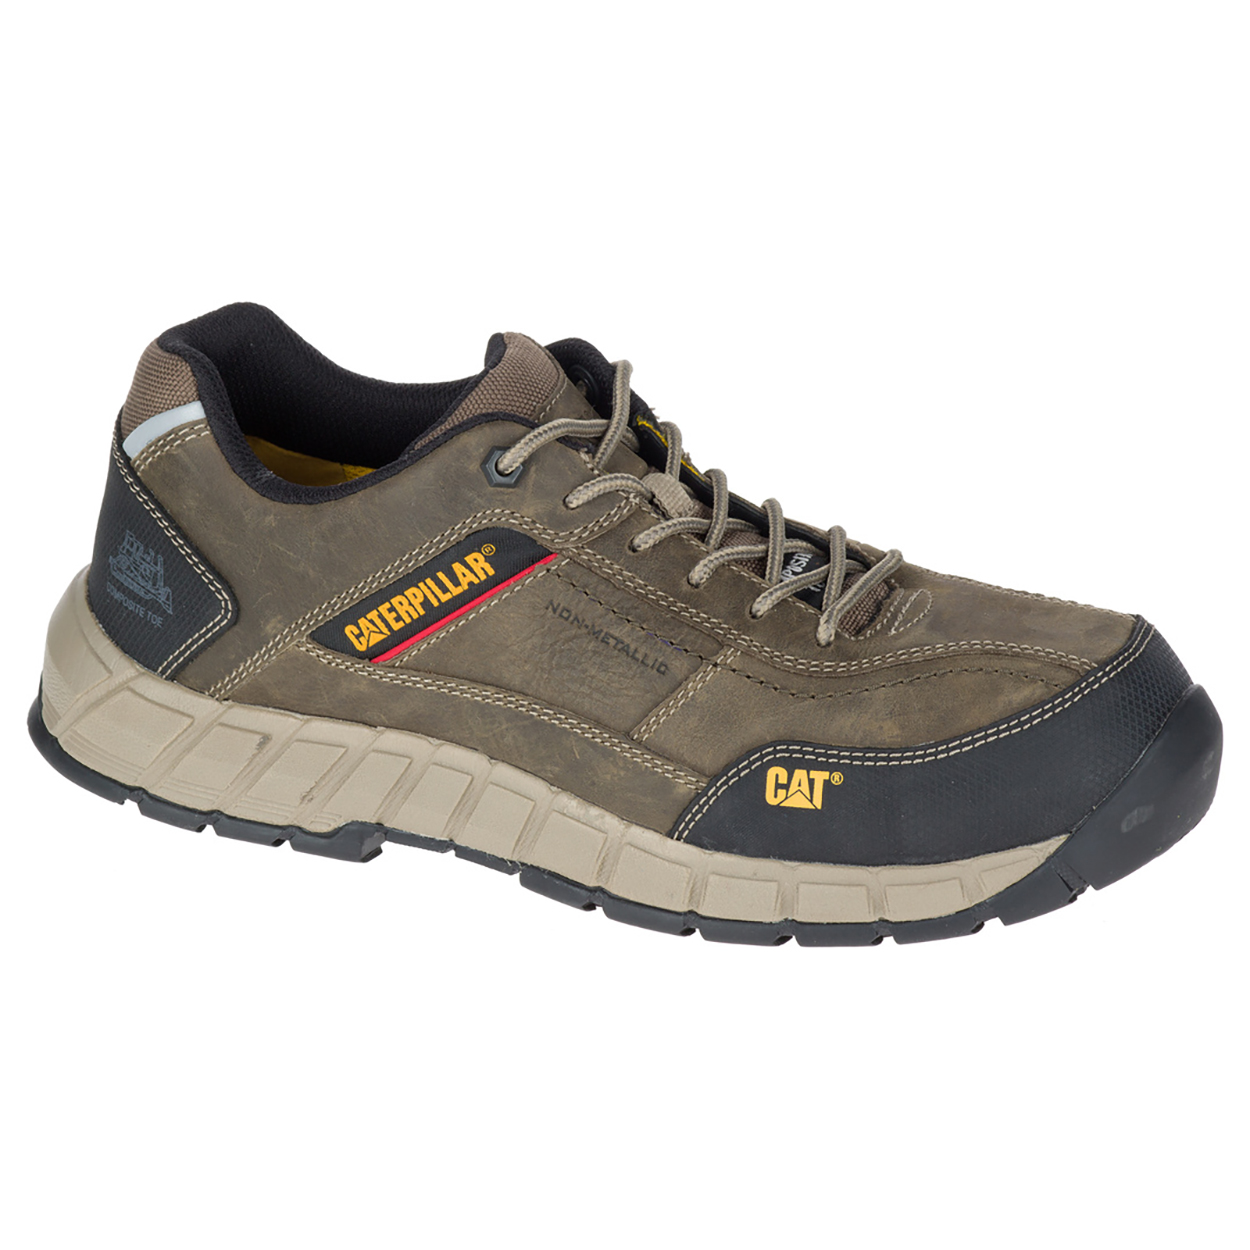 Men's Caterpillar Streamline Leather Ct S1 P Hro Sra Sa Safety Shoes Dark Grey | Cat-068792